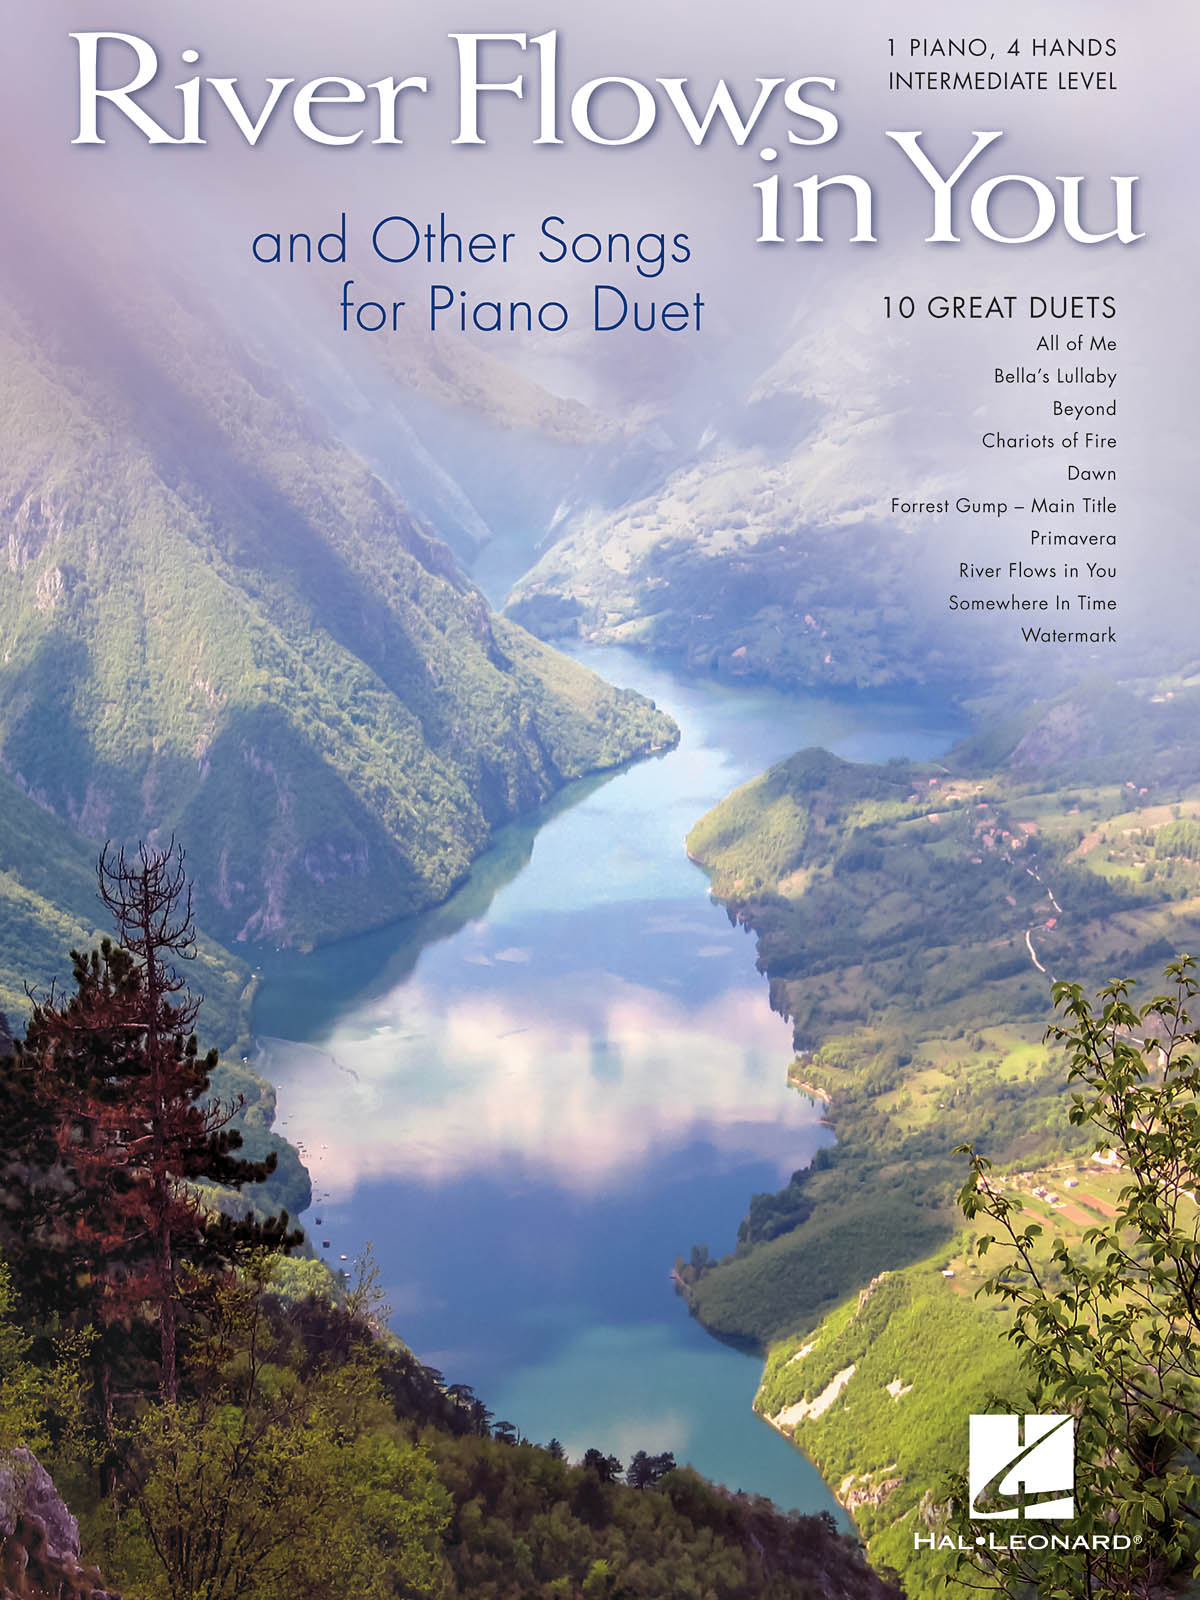 River Flows in You and Other Songs - Intermediate Piano Duet (1 Piano, 4 Hands) - noty pro čtyřruční klavír